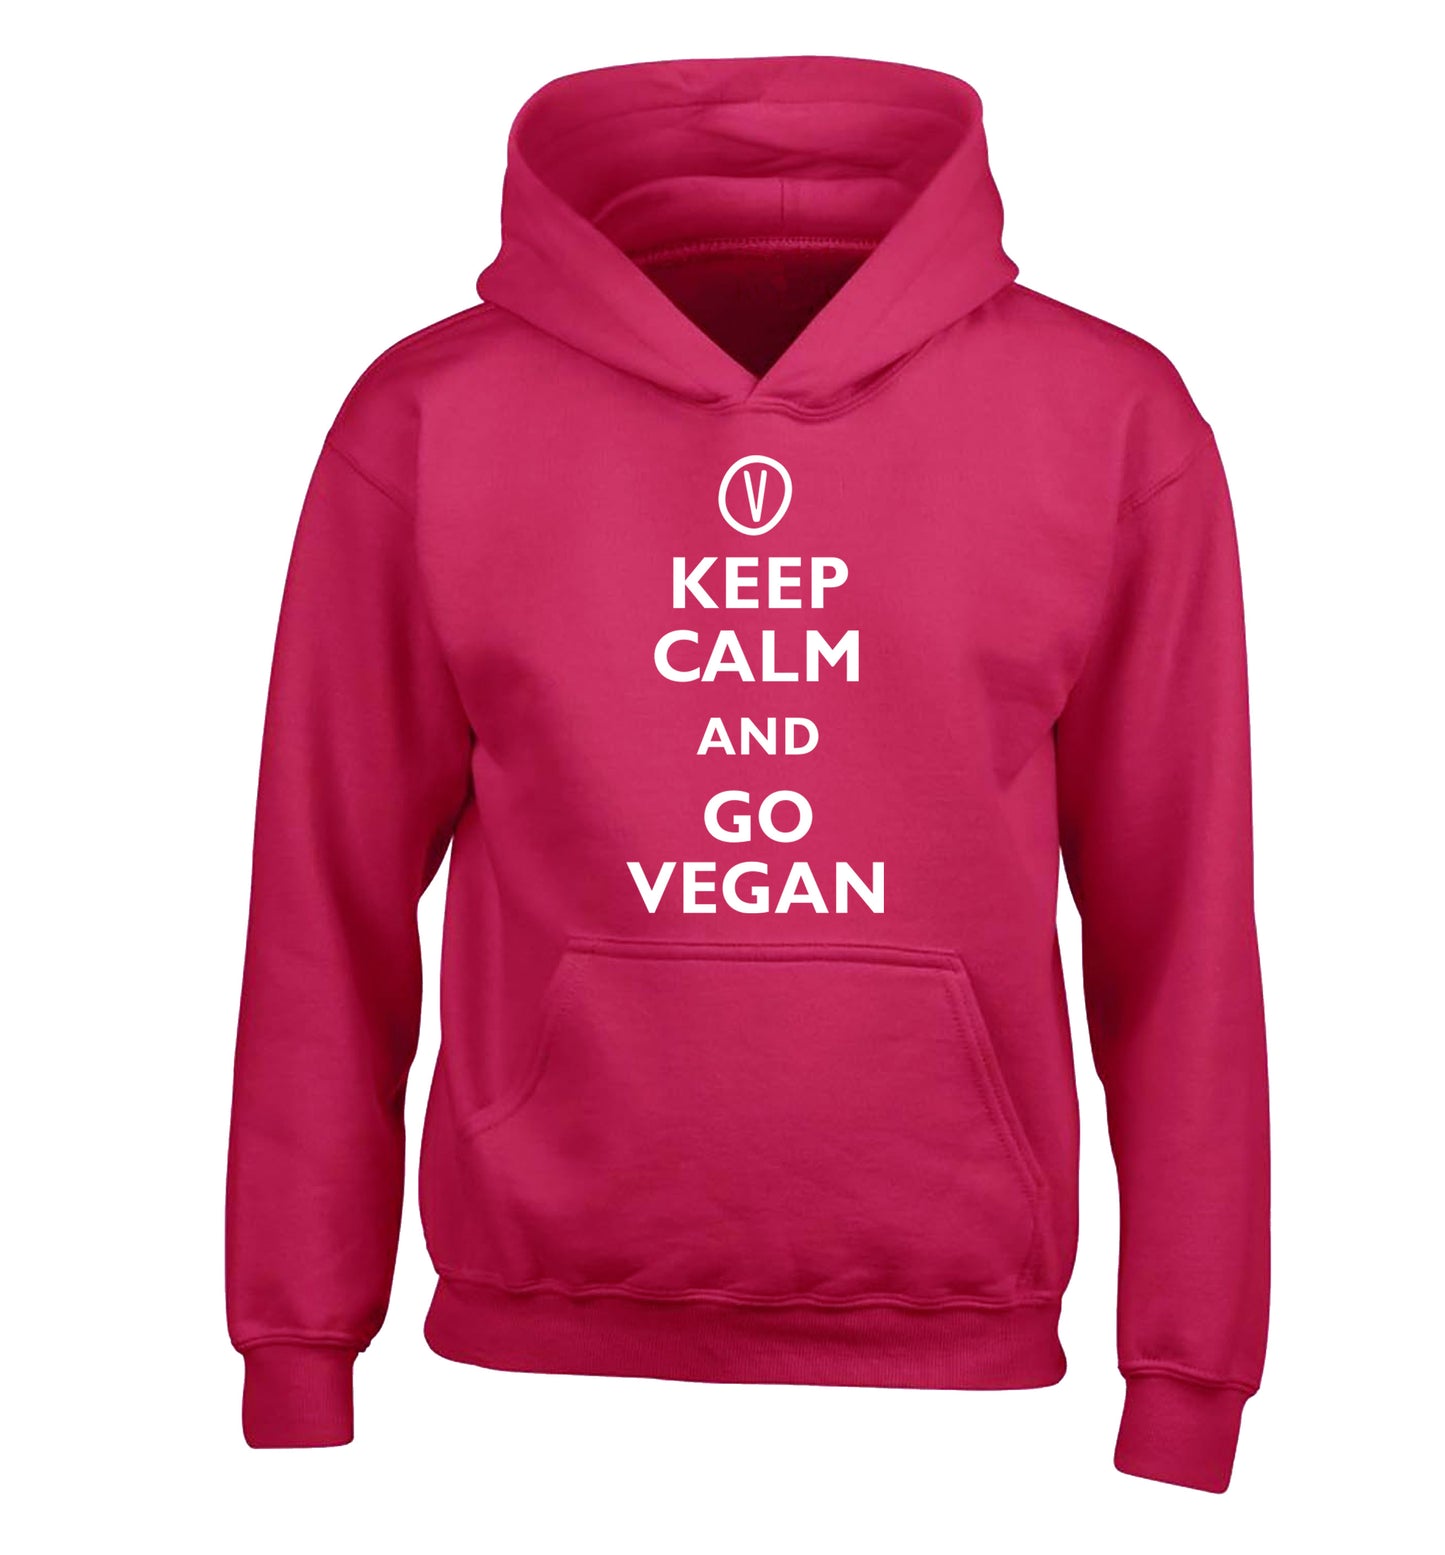 Keep calm and go vegan children's pink hoodie 12-13 Years